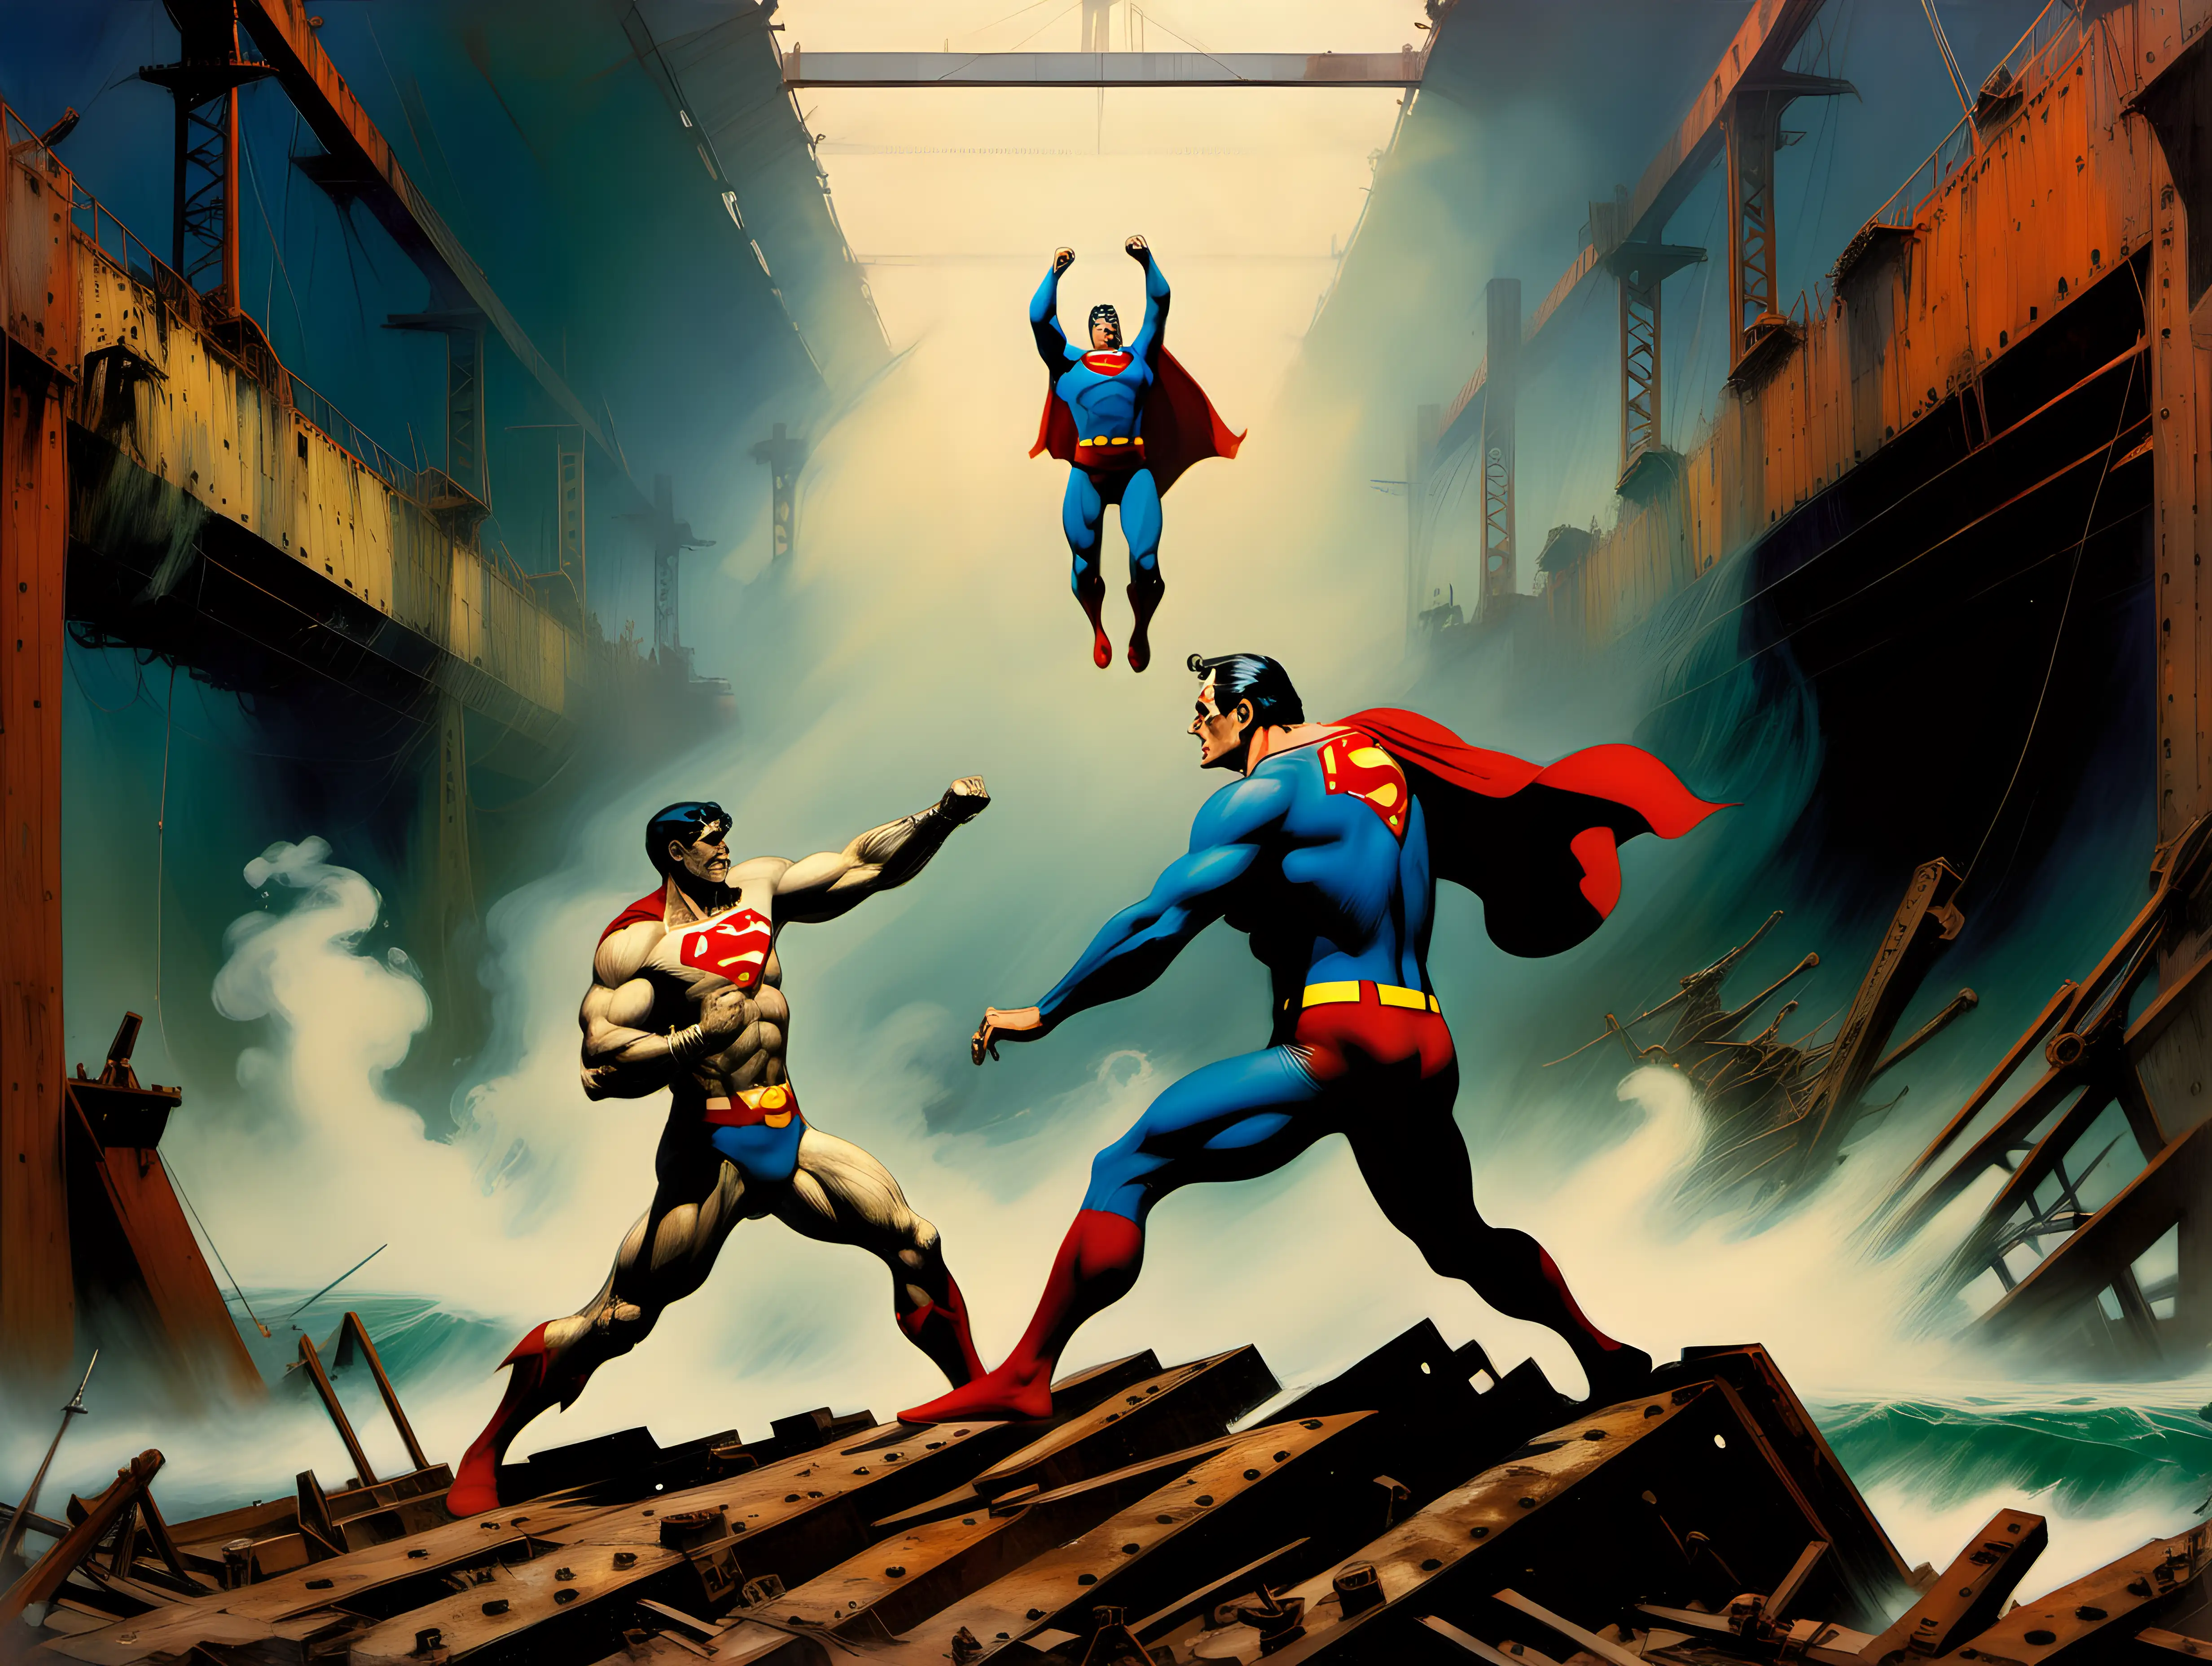 Epic Battle Frank Frazetta Style Superman Confronts Bizarro Superman in Abandoned Shipyard